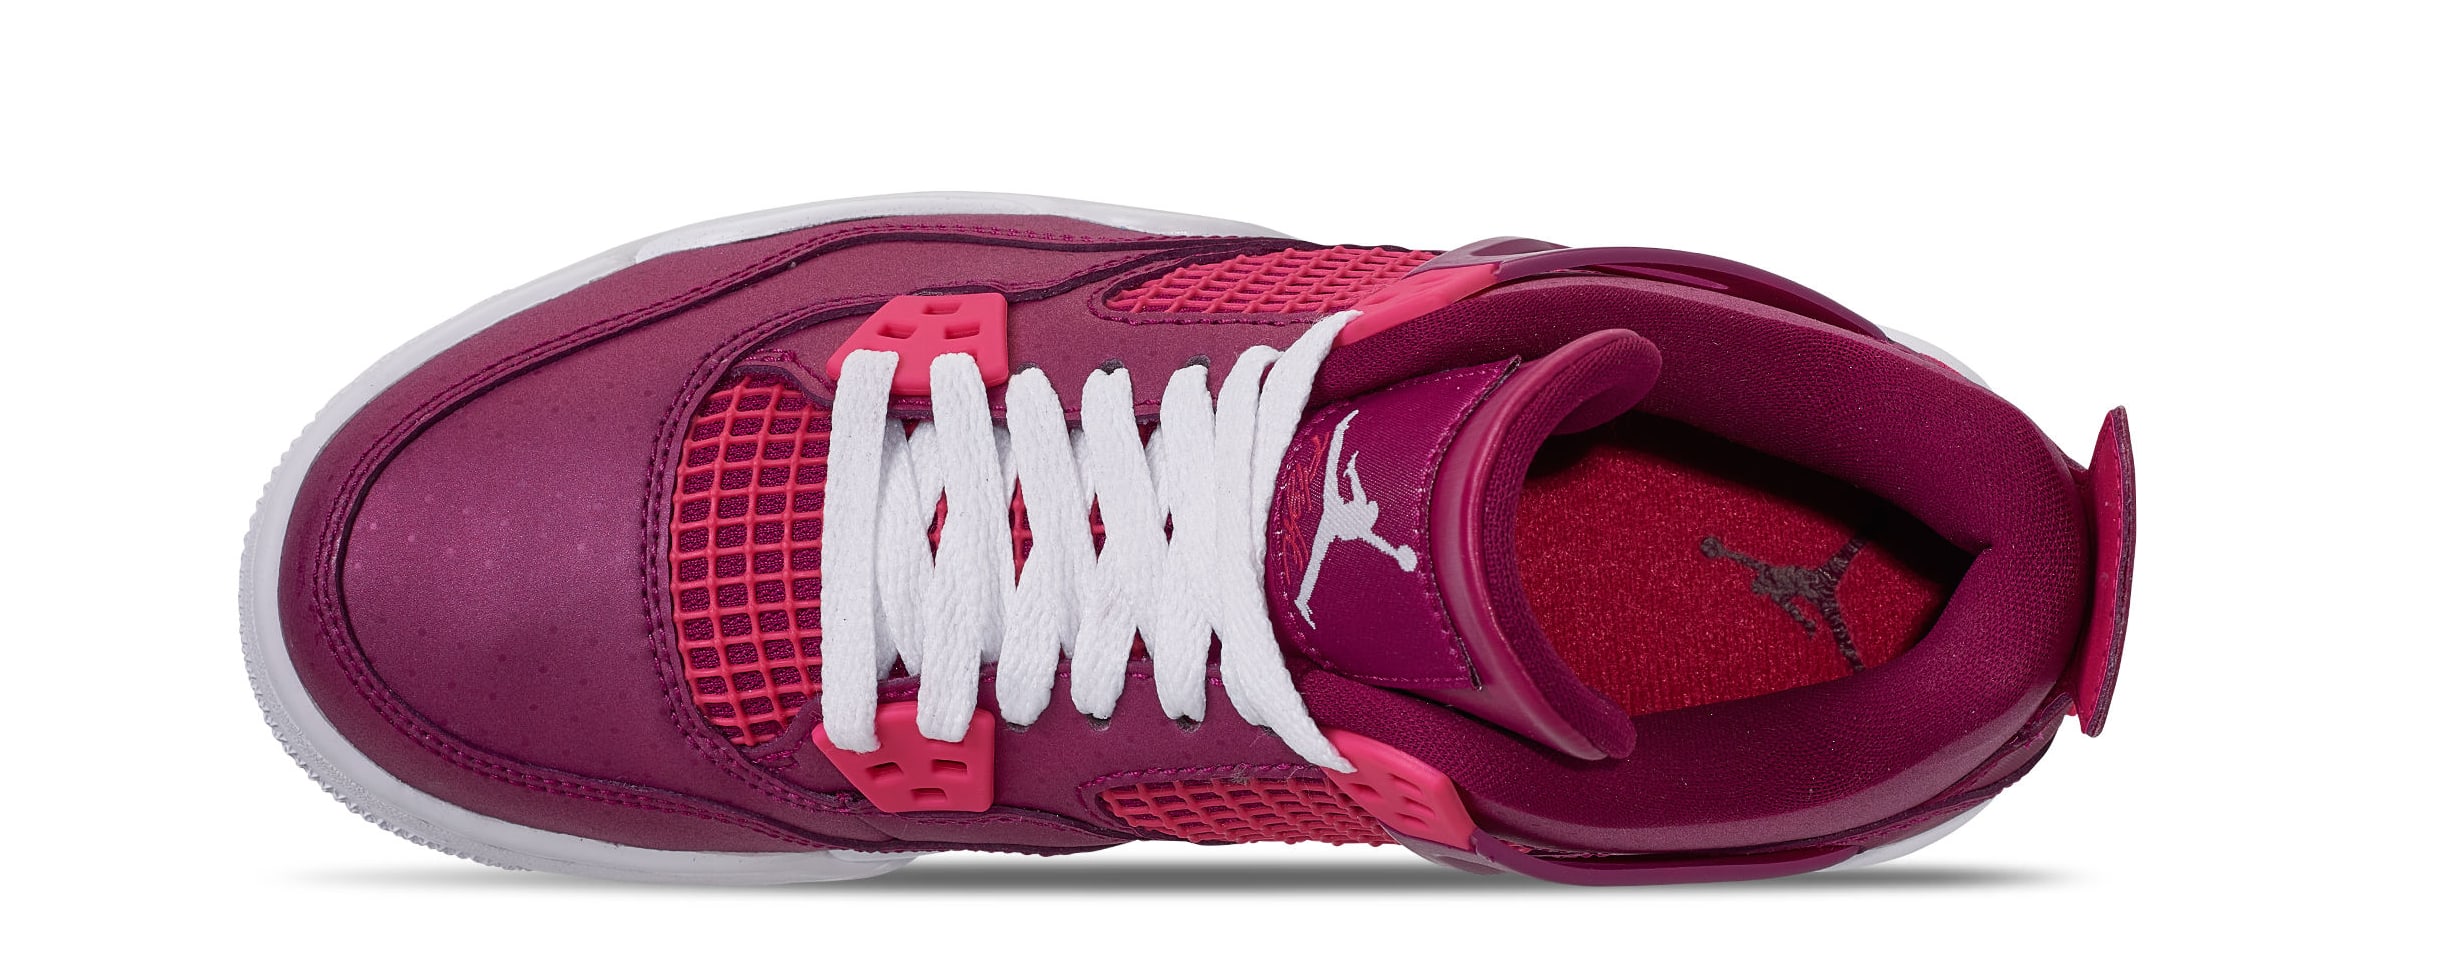 Air Jordan 4 Retro GS &#x27;True Berry/Rush Pink/White&#x27; 487724-661 (Top)